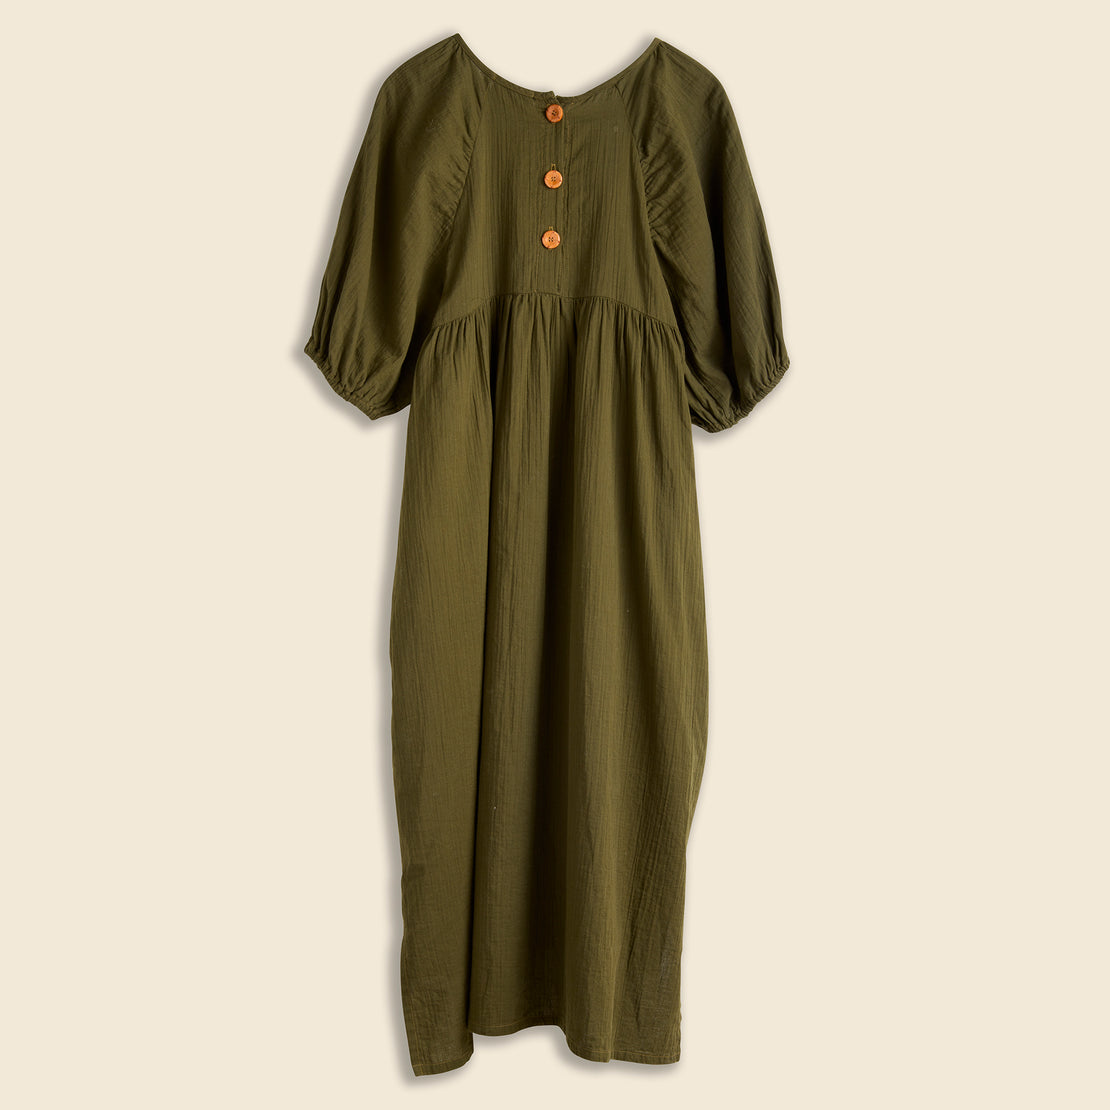 Mardi Dress - Hunter Green - Atelier Delphine - STAG Provisions - W - Onepiece - Dress